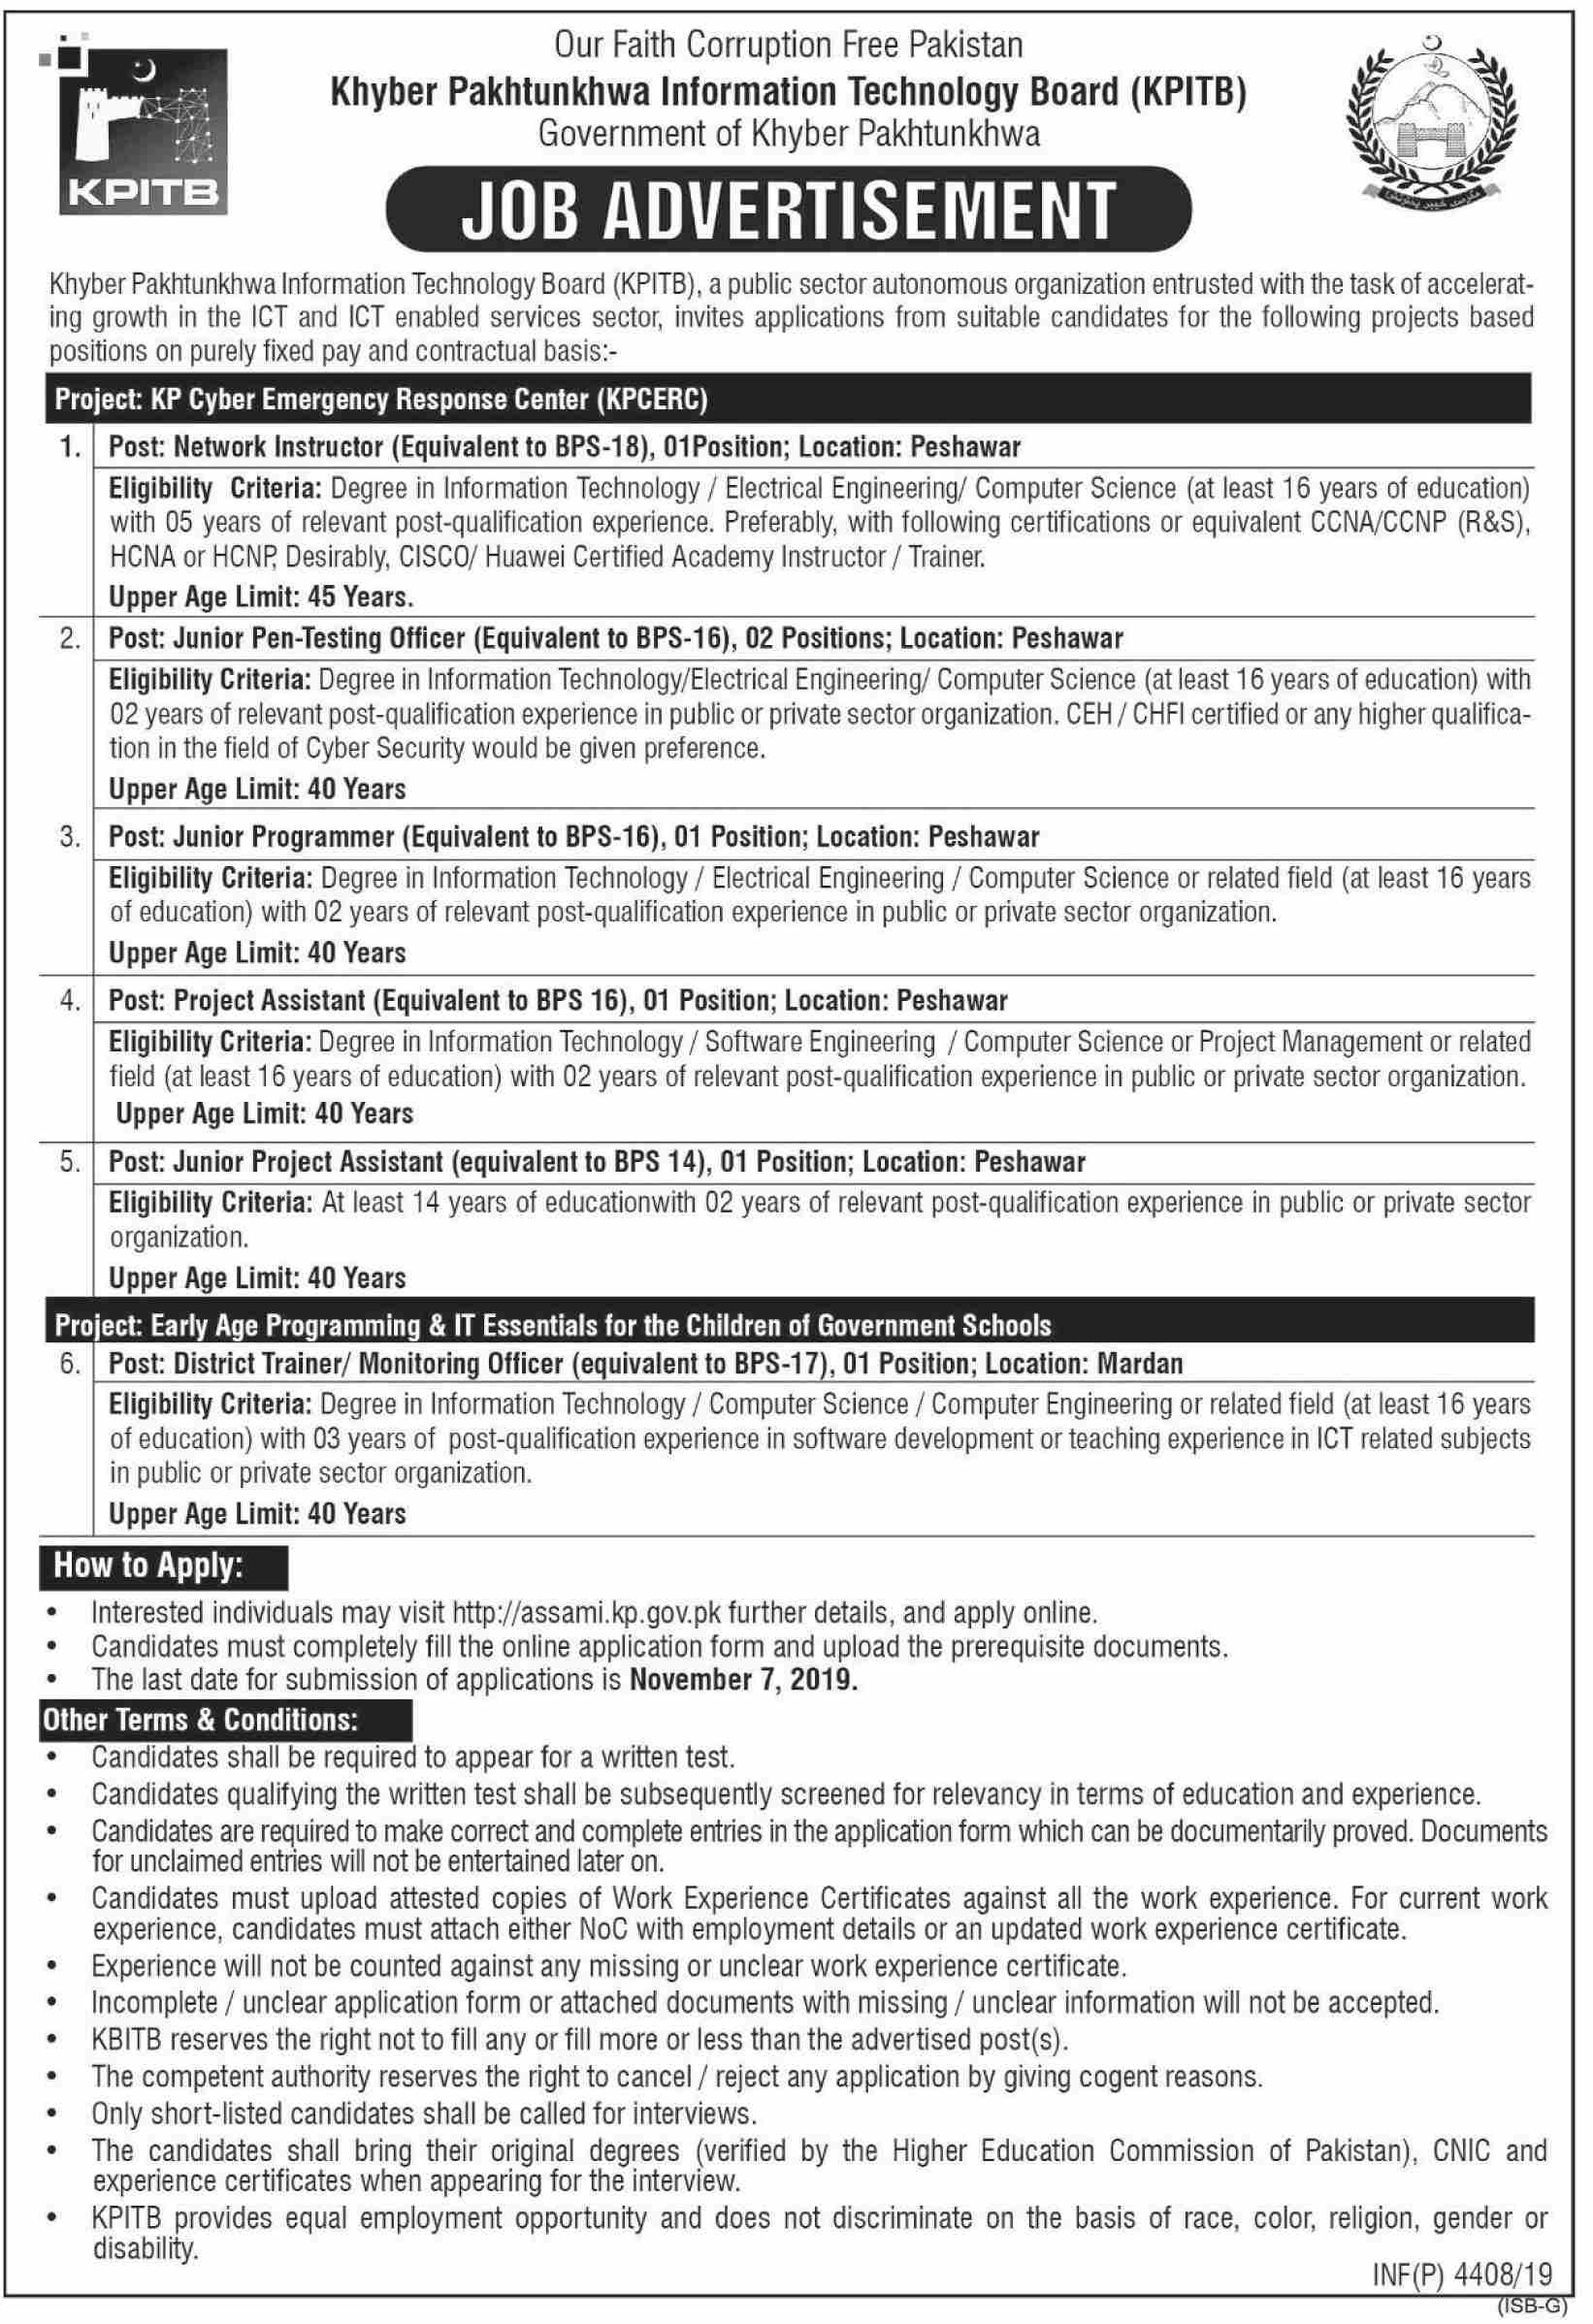 Jobs In Khyber Pakhtunkhwa Information Technology Board KPITB 22 October 2019